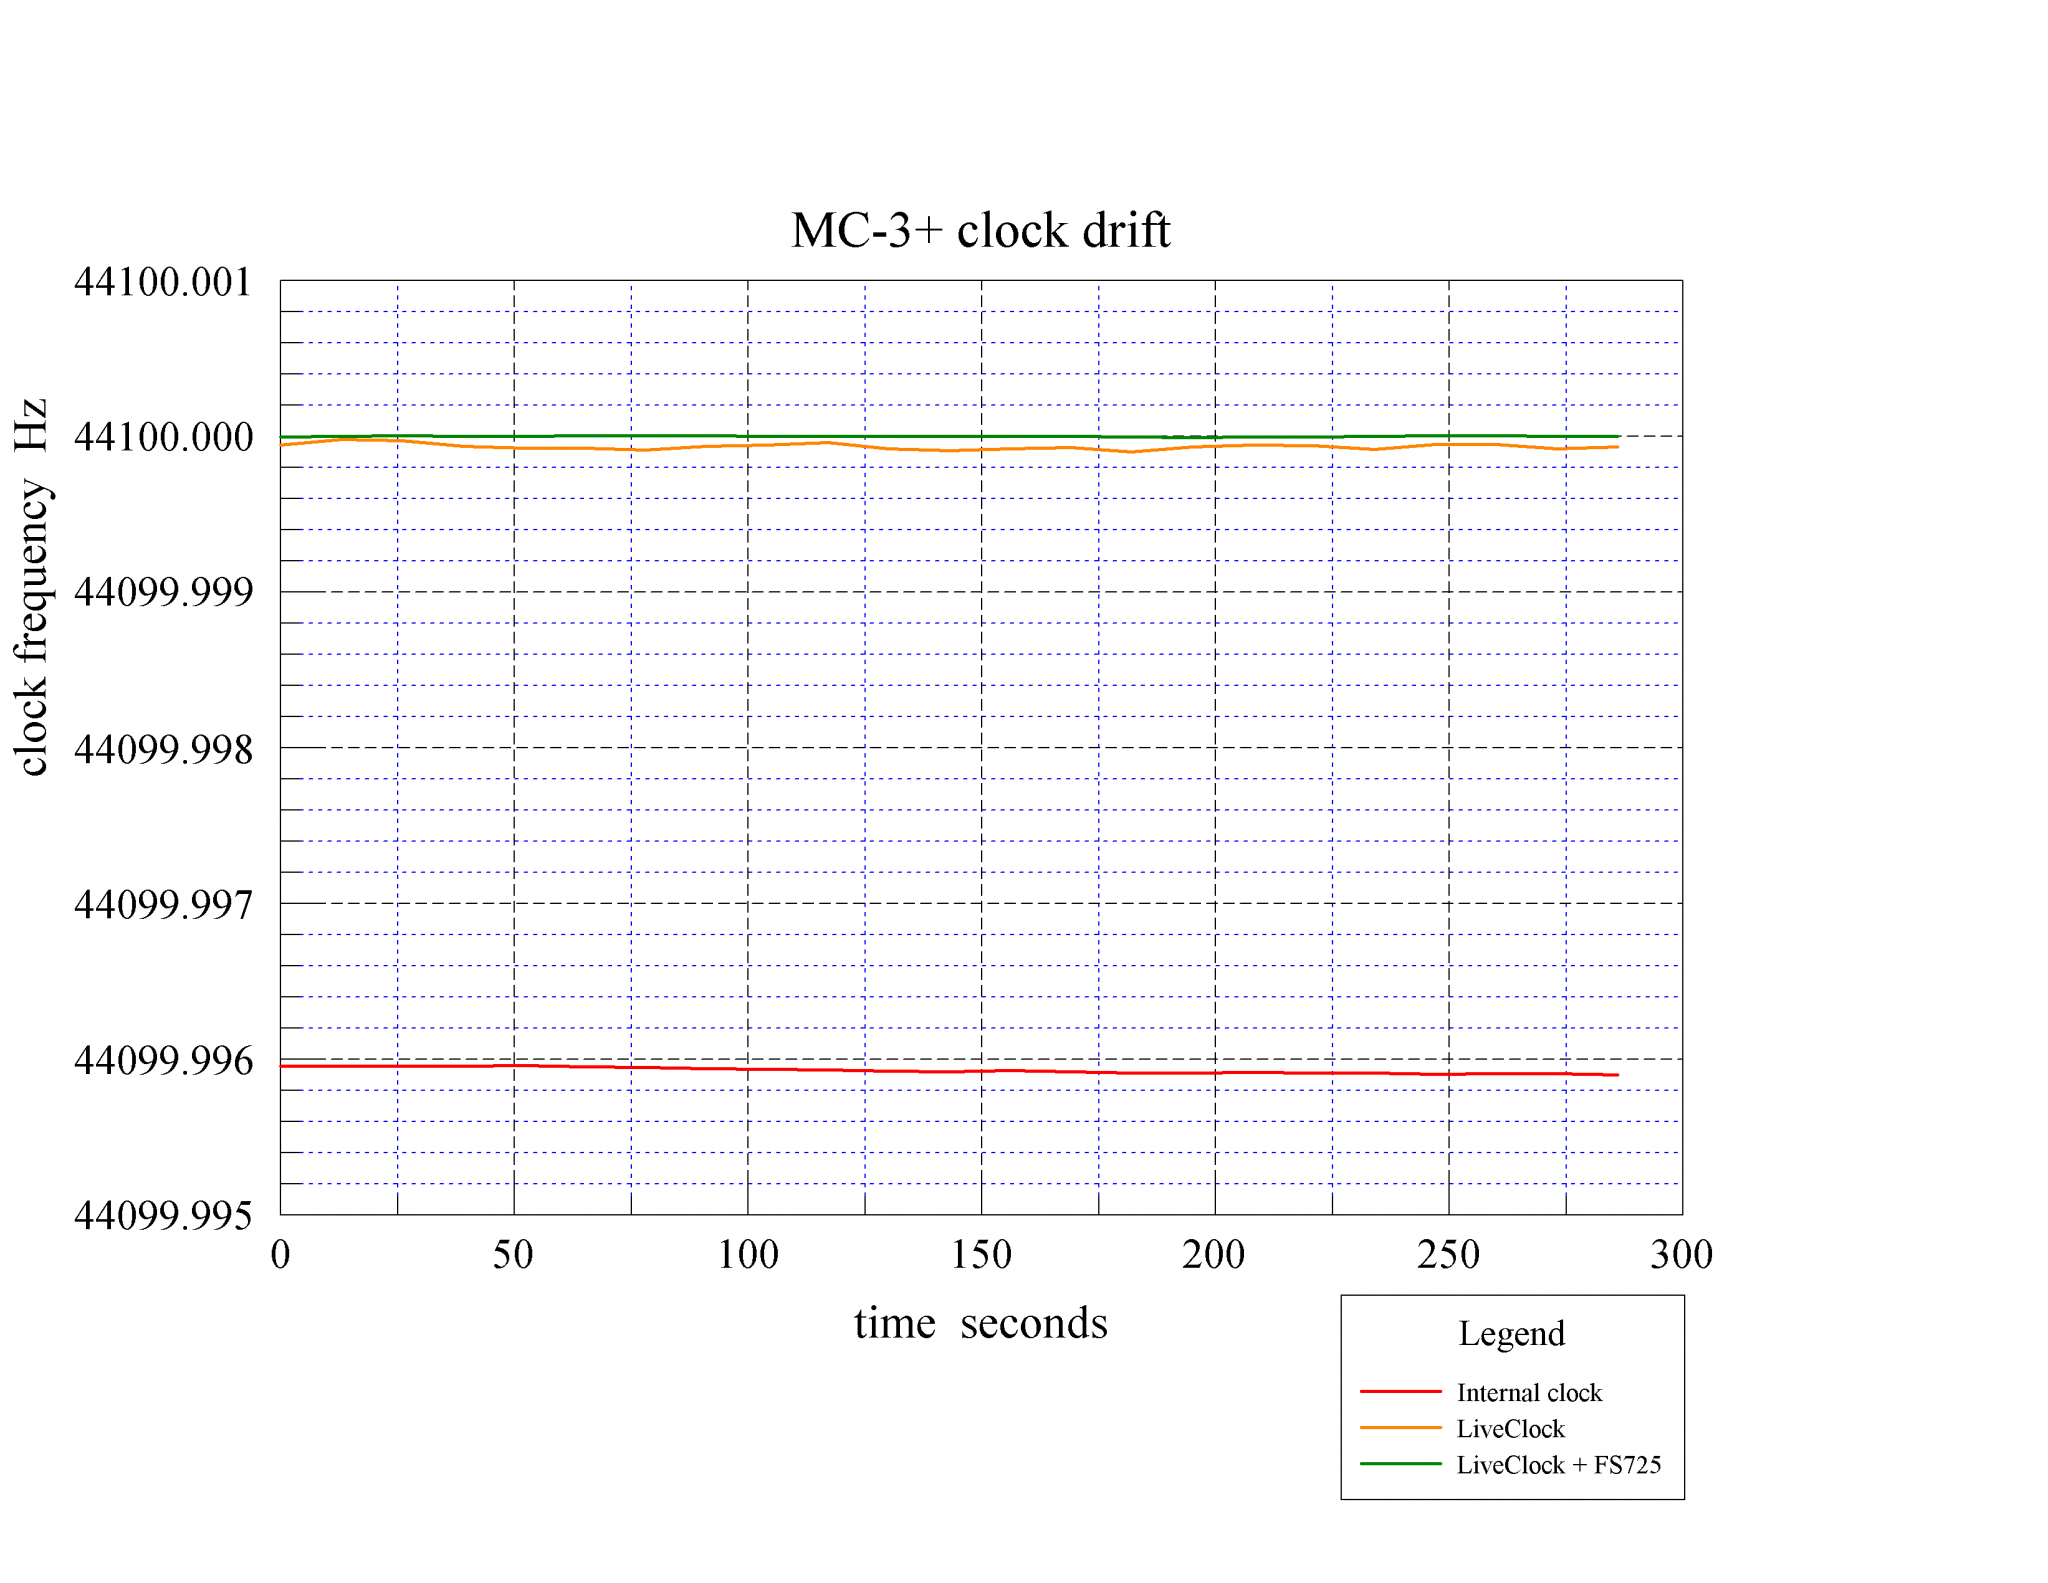 20181001-1045 MC-3+ clock drift - int - LC - LC+FS725 - overlaid.png